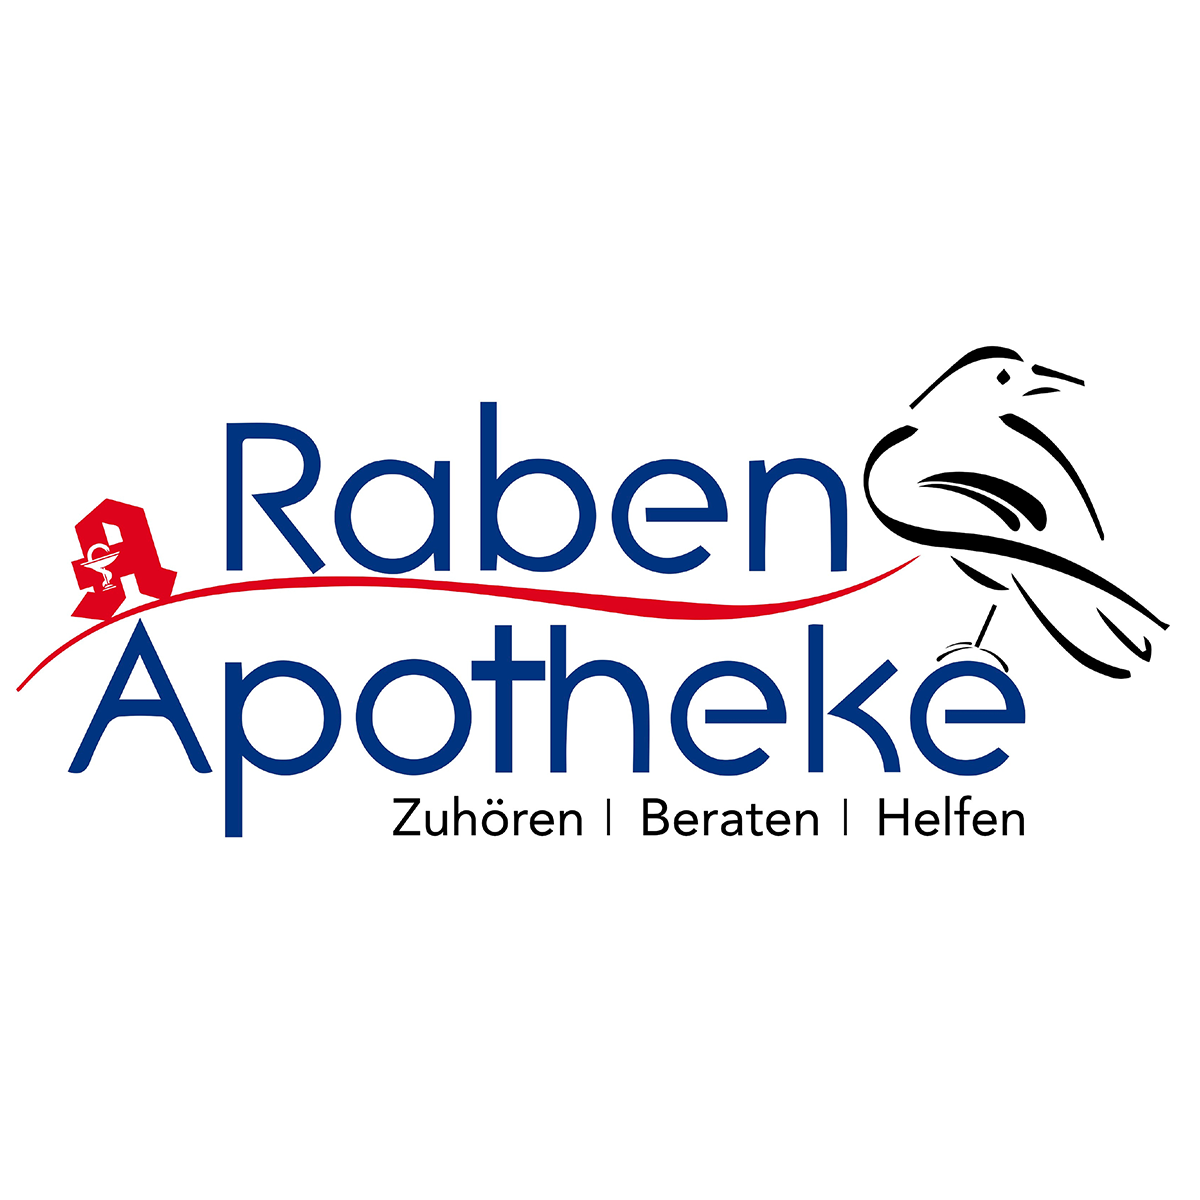 Raben-Apotheke in Frankfurt am Main - Logo